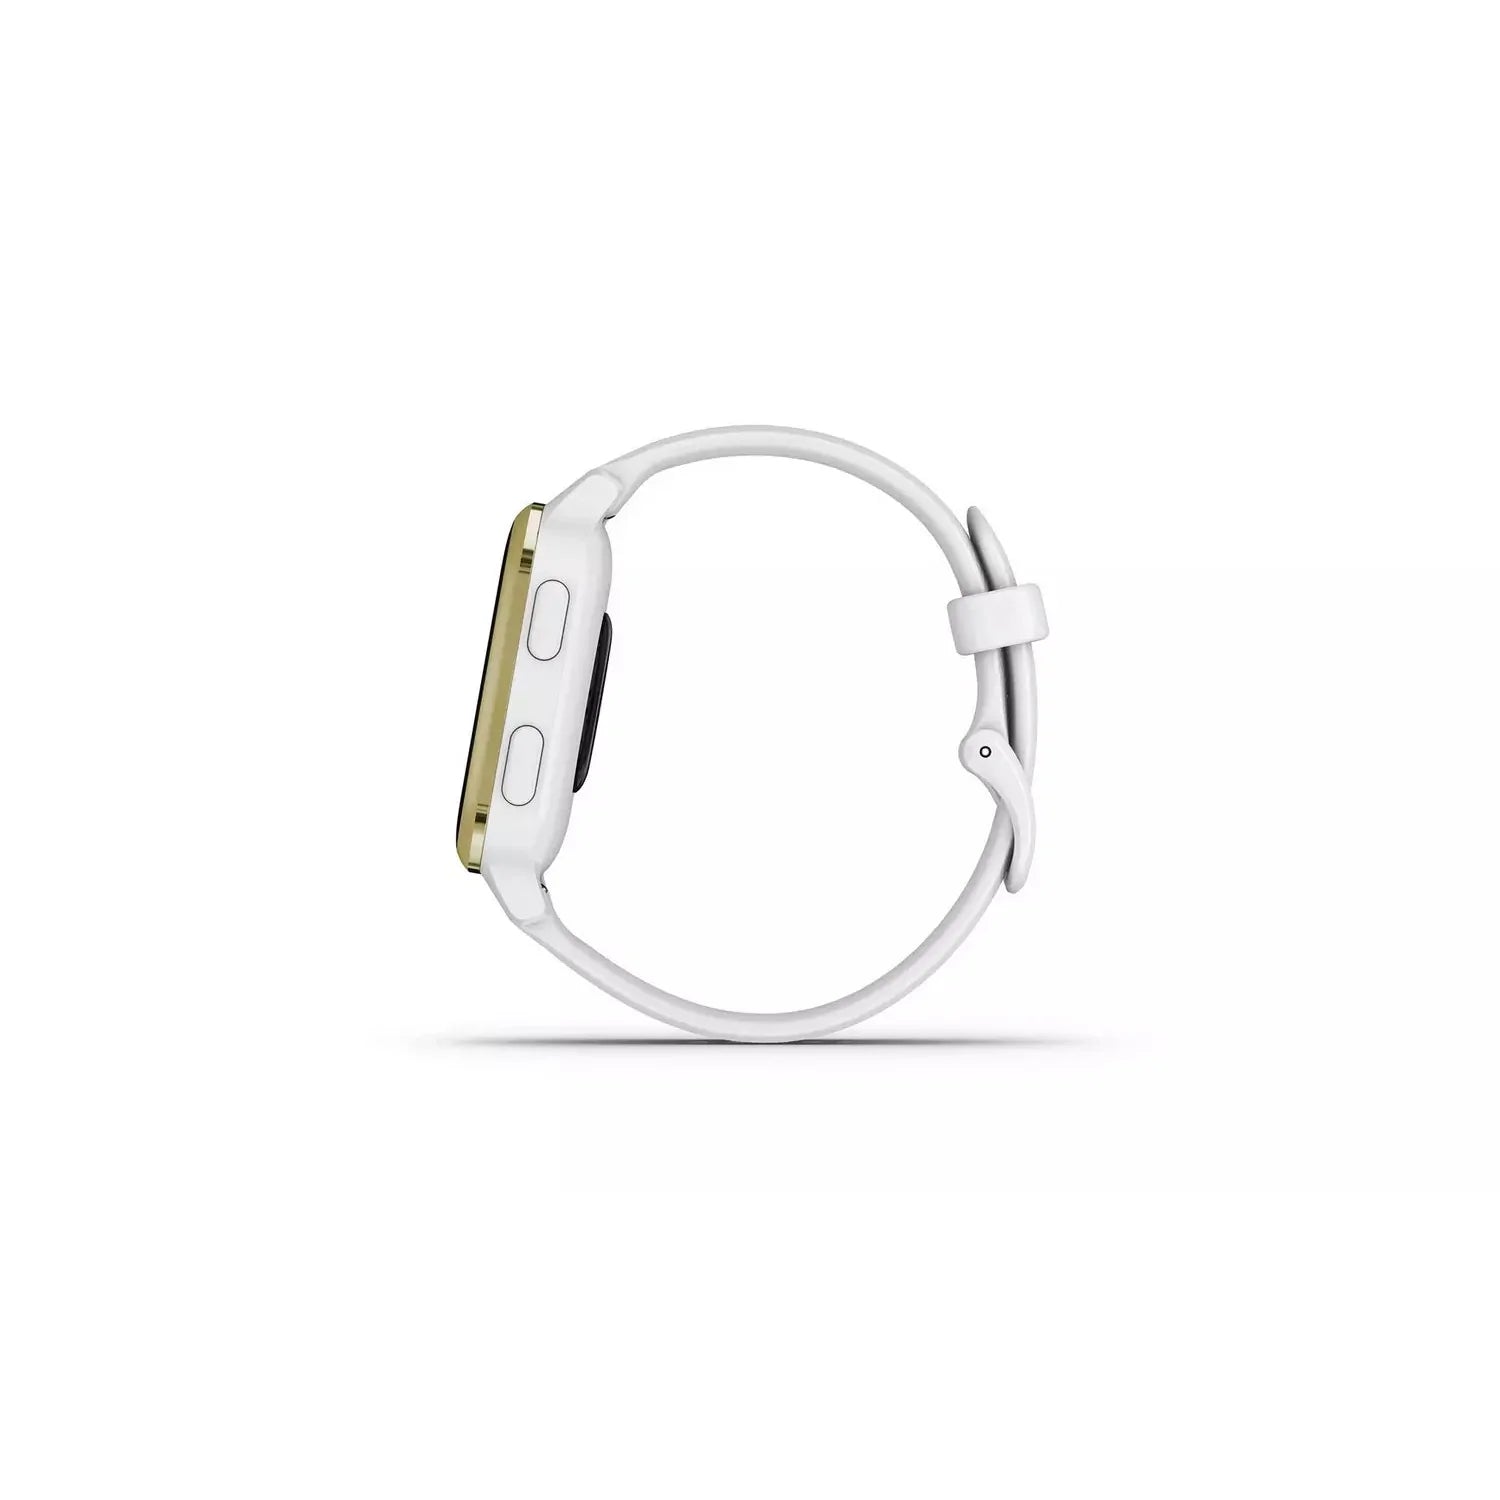 Garmin Venu Sq GPS Smart Watch - White - Refurbished Pristine